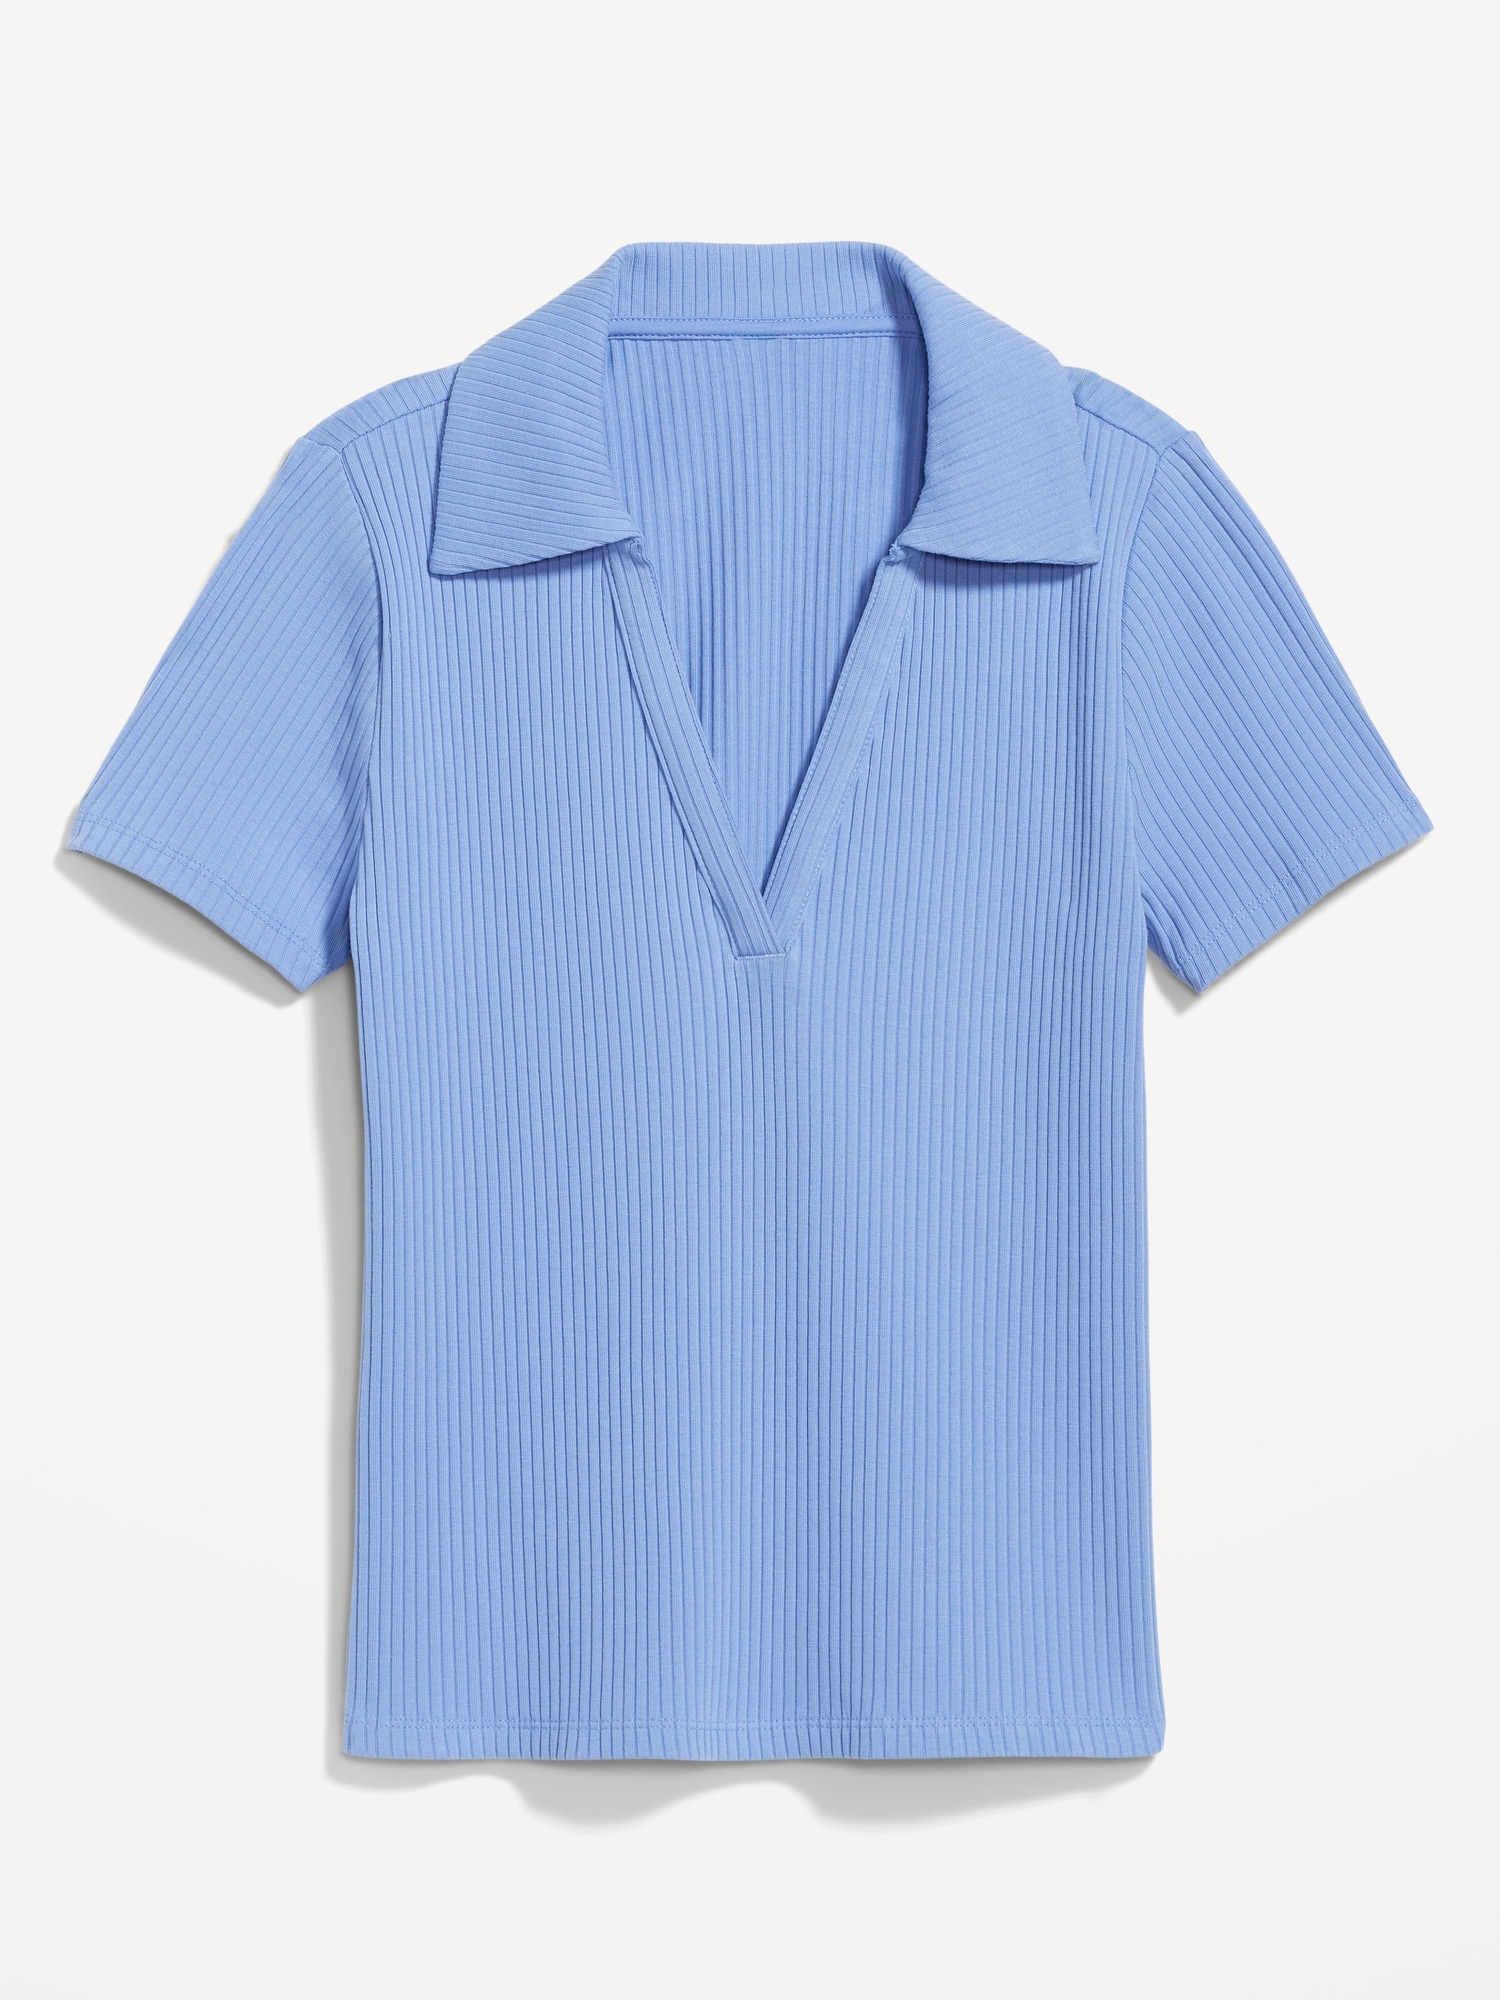 Old Navy Women's Short-Sleeve Rib-Knit Collared Shirt Blue Regular Size XS